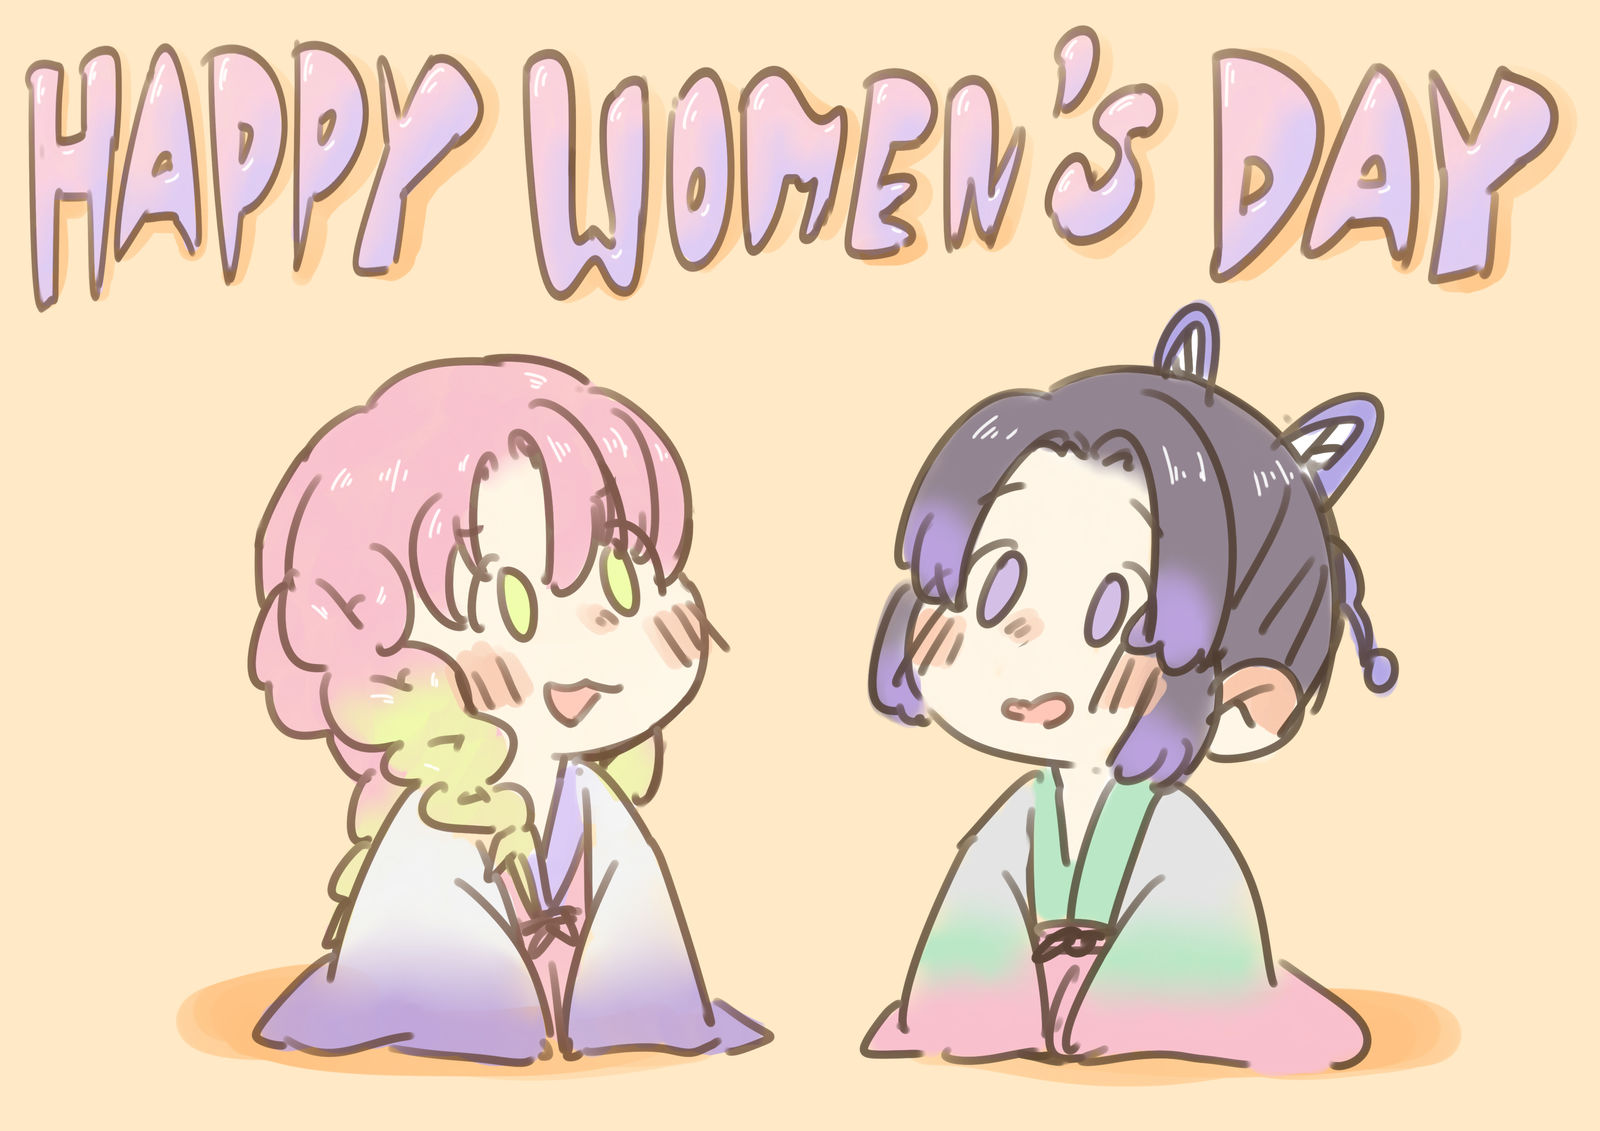 HAPPY WOMEN'S DAY!